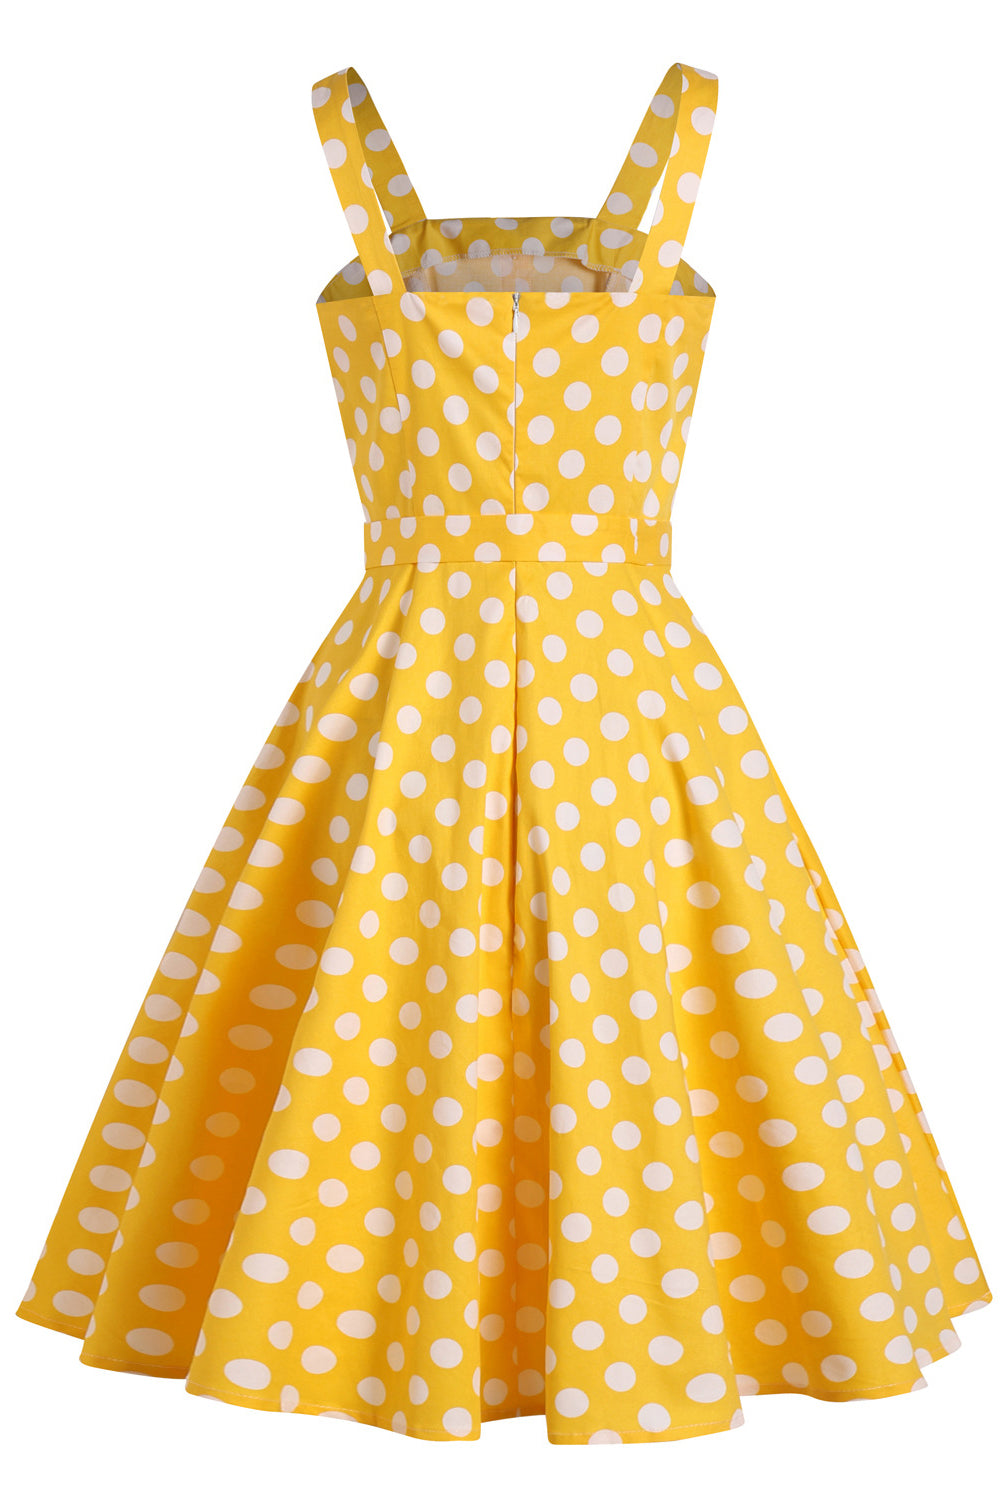 ZAPAKA Women Vintage Dress Yellow Polka Dots A-line Sleeveless 1950s ...